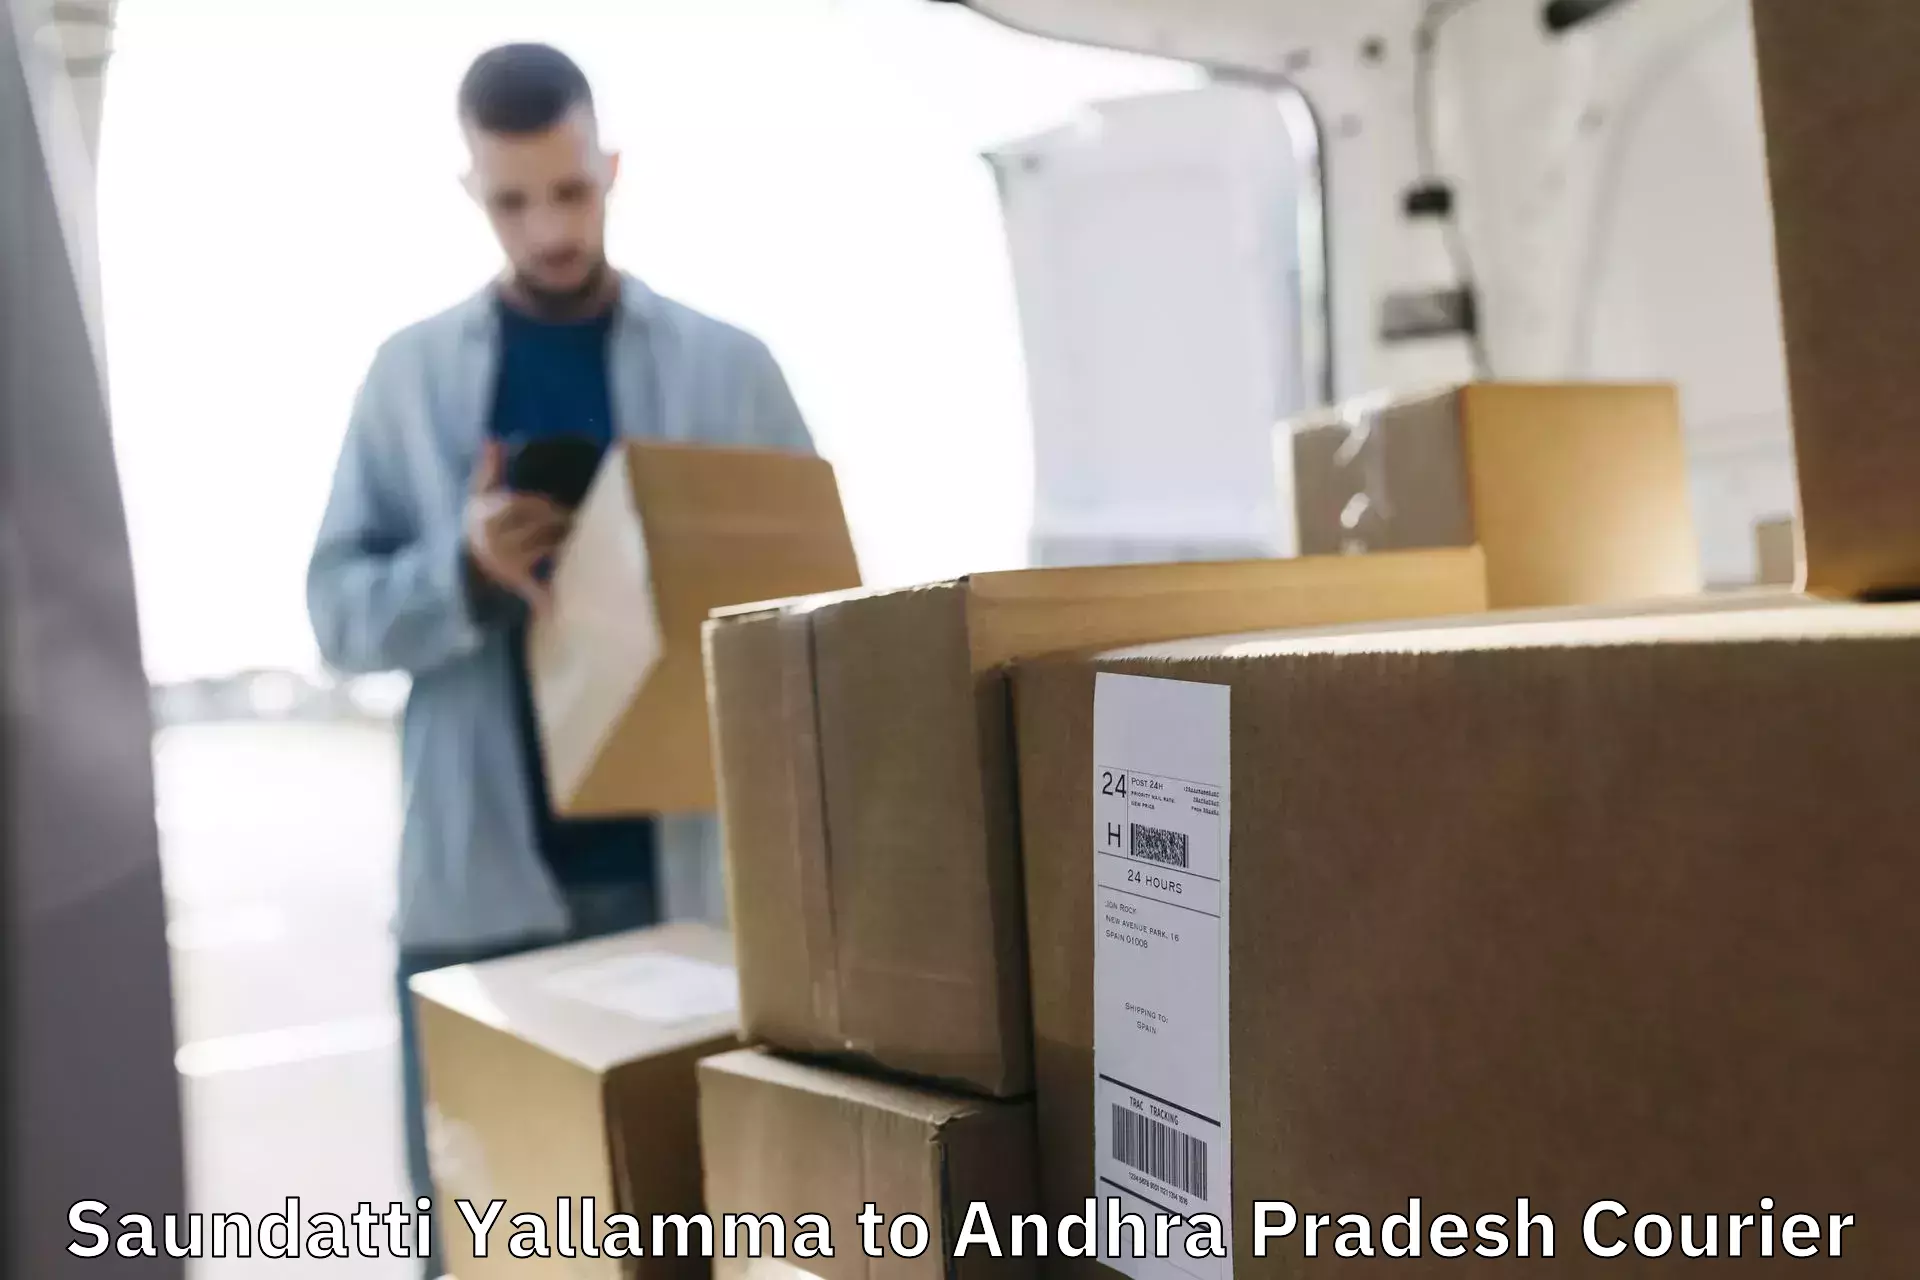 Courier tracking online Saundatti Yallamma to Tirupati